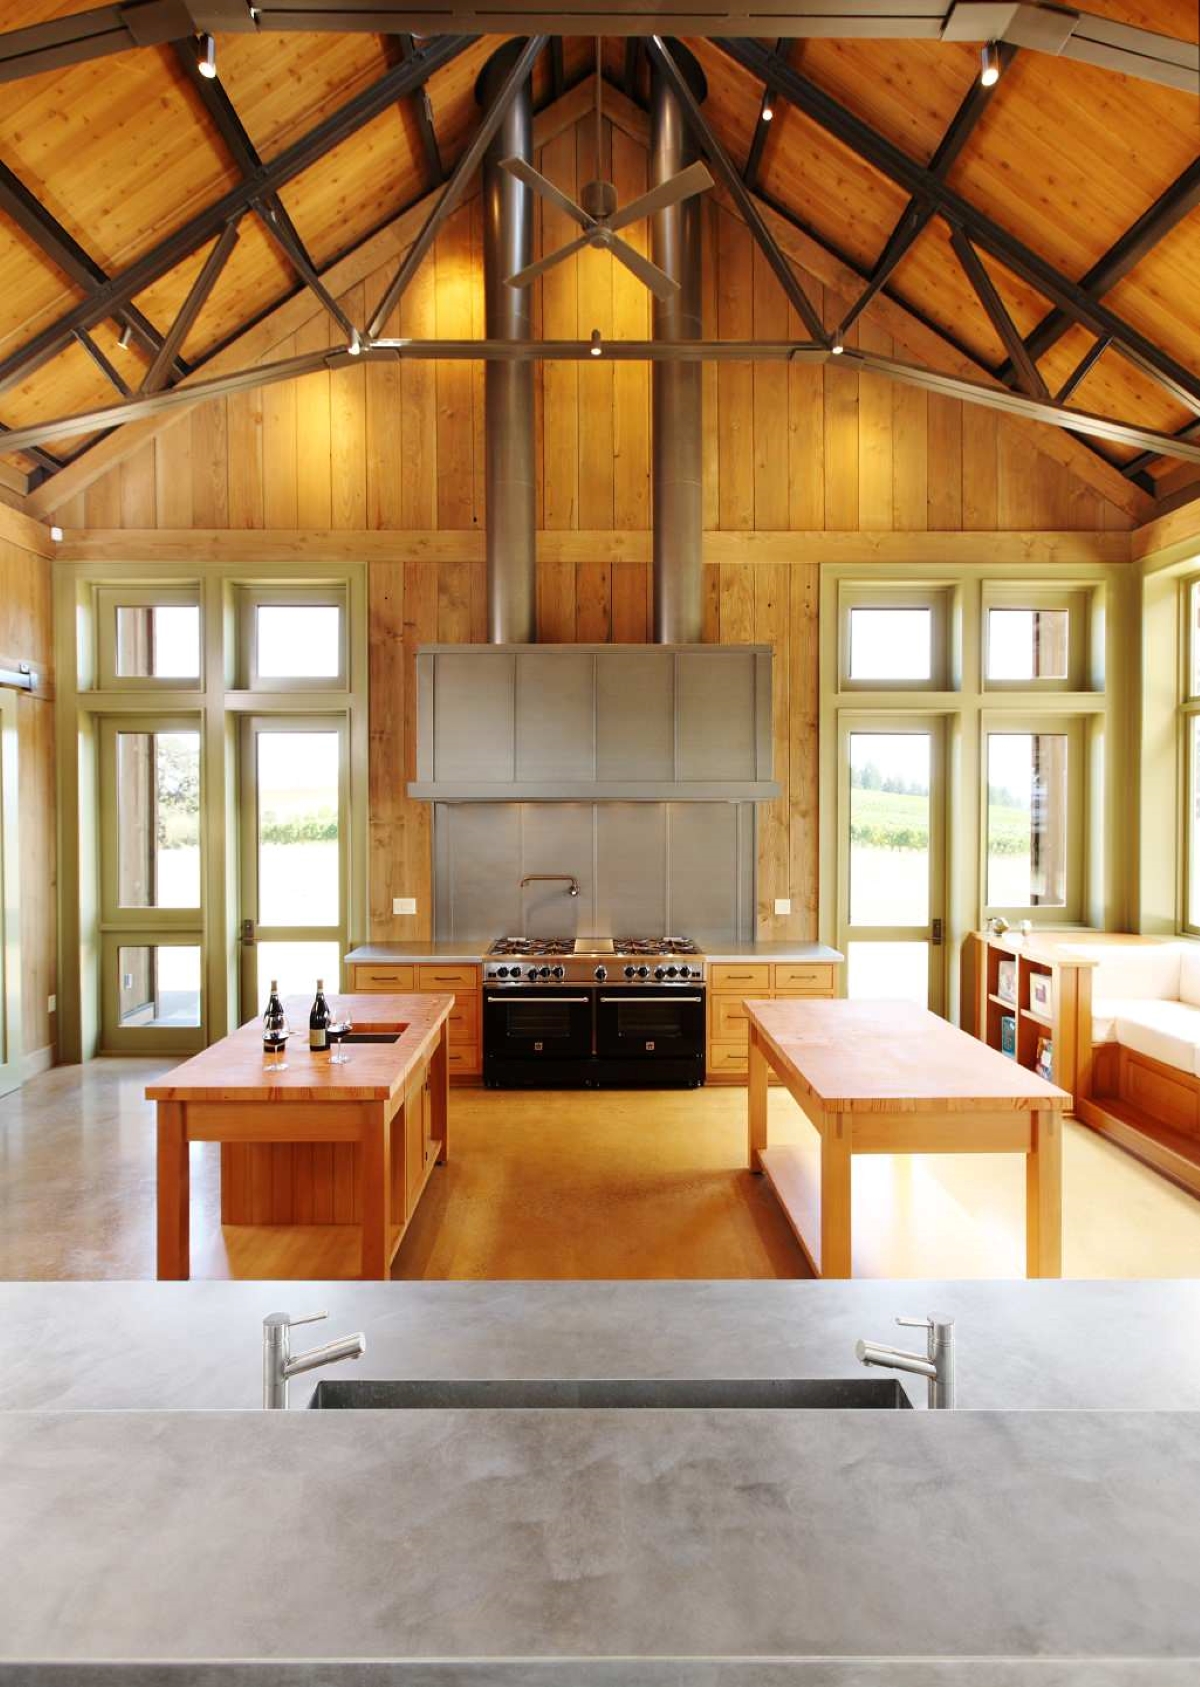 Symmetrical island kitchen